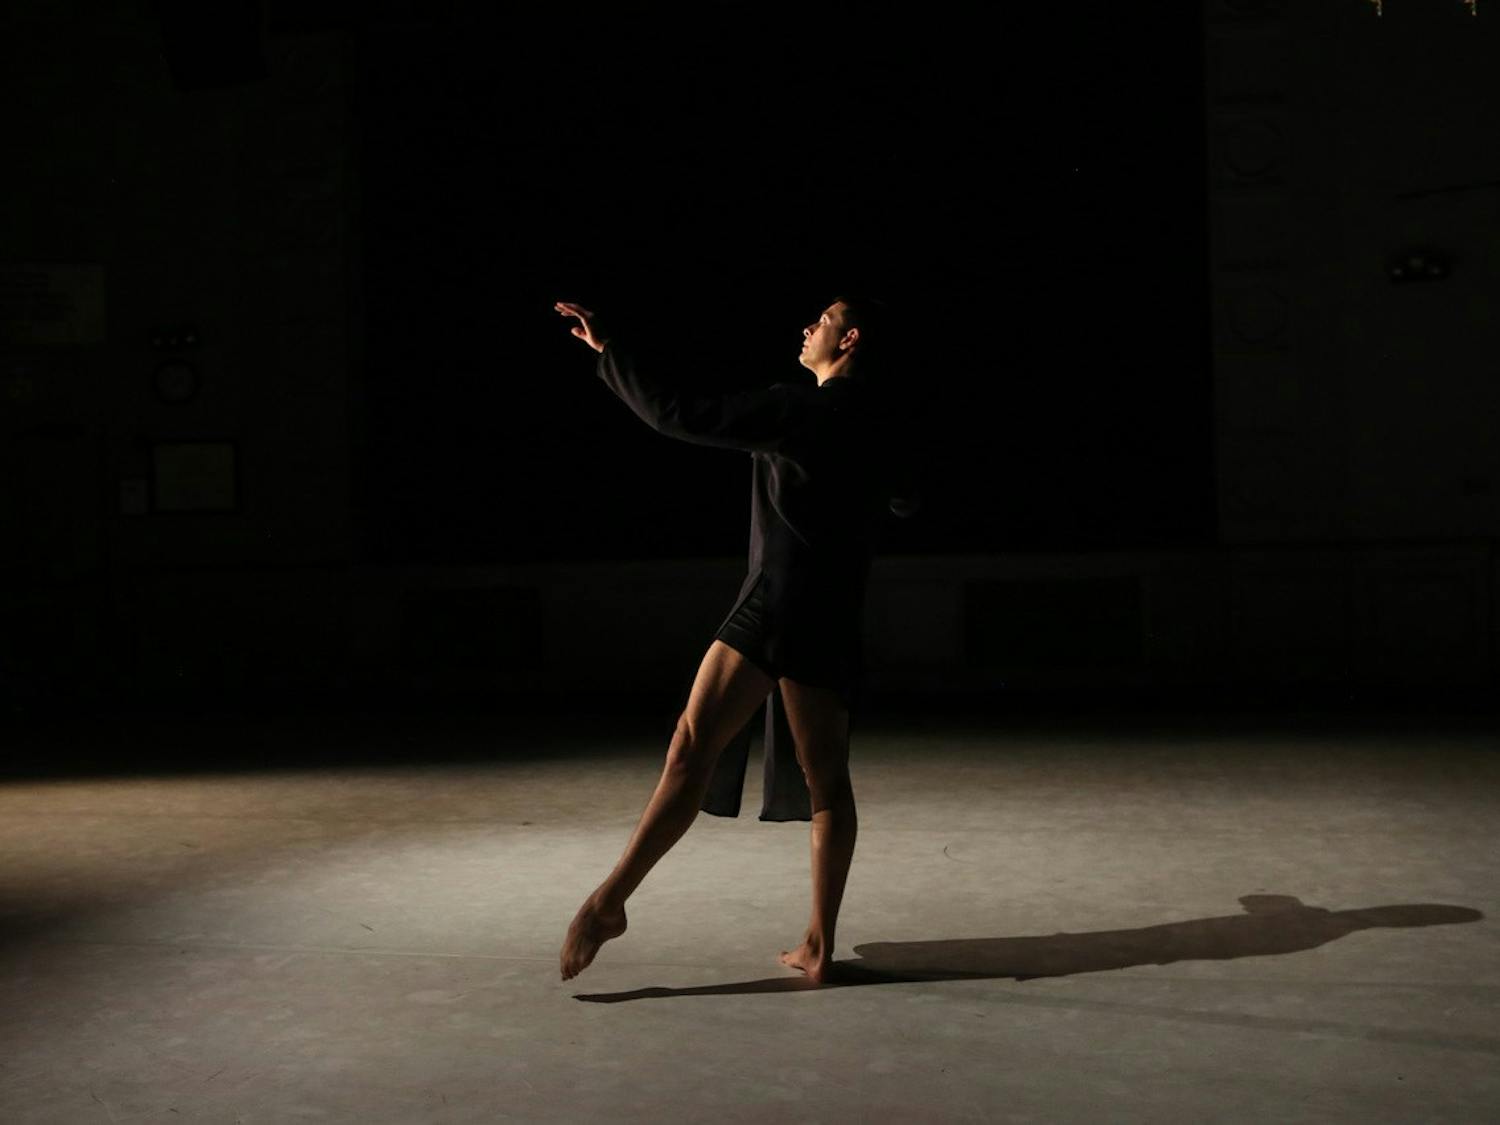 World-renowned dancer and choreographer Jonah Bokaer performing. Photo courtesy of Allison Portnow Lathrop.